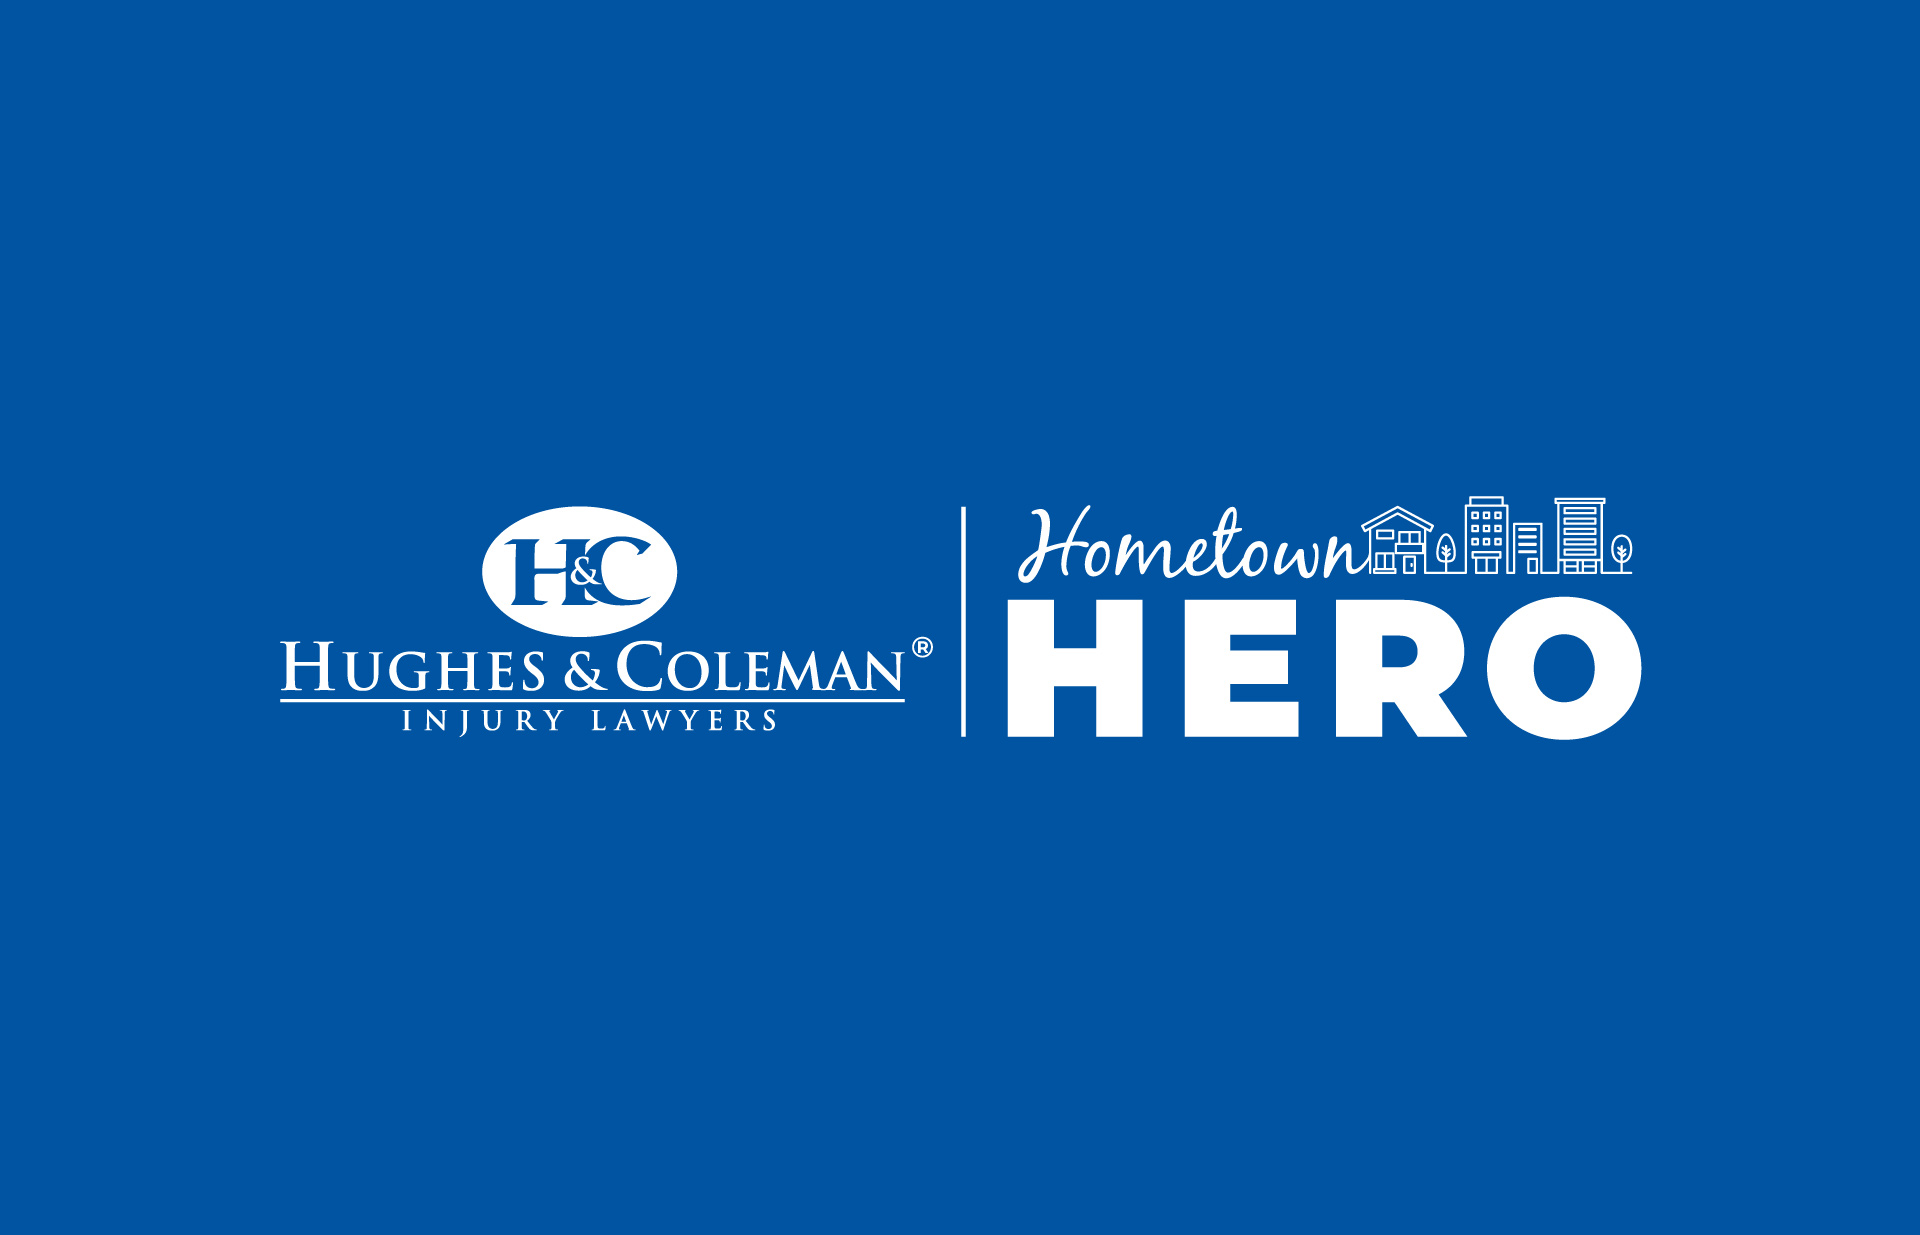 Hughes & Coleman Hometown Hero